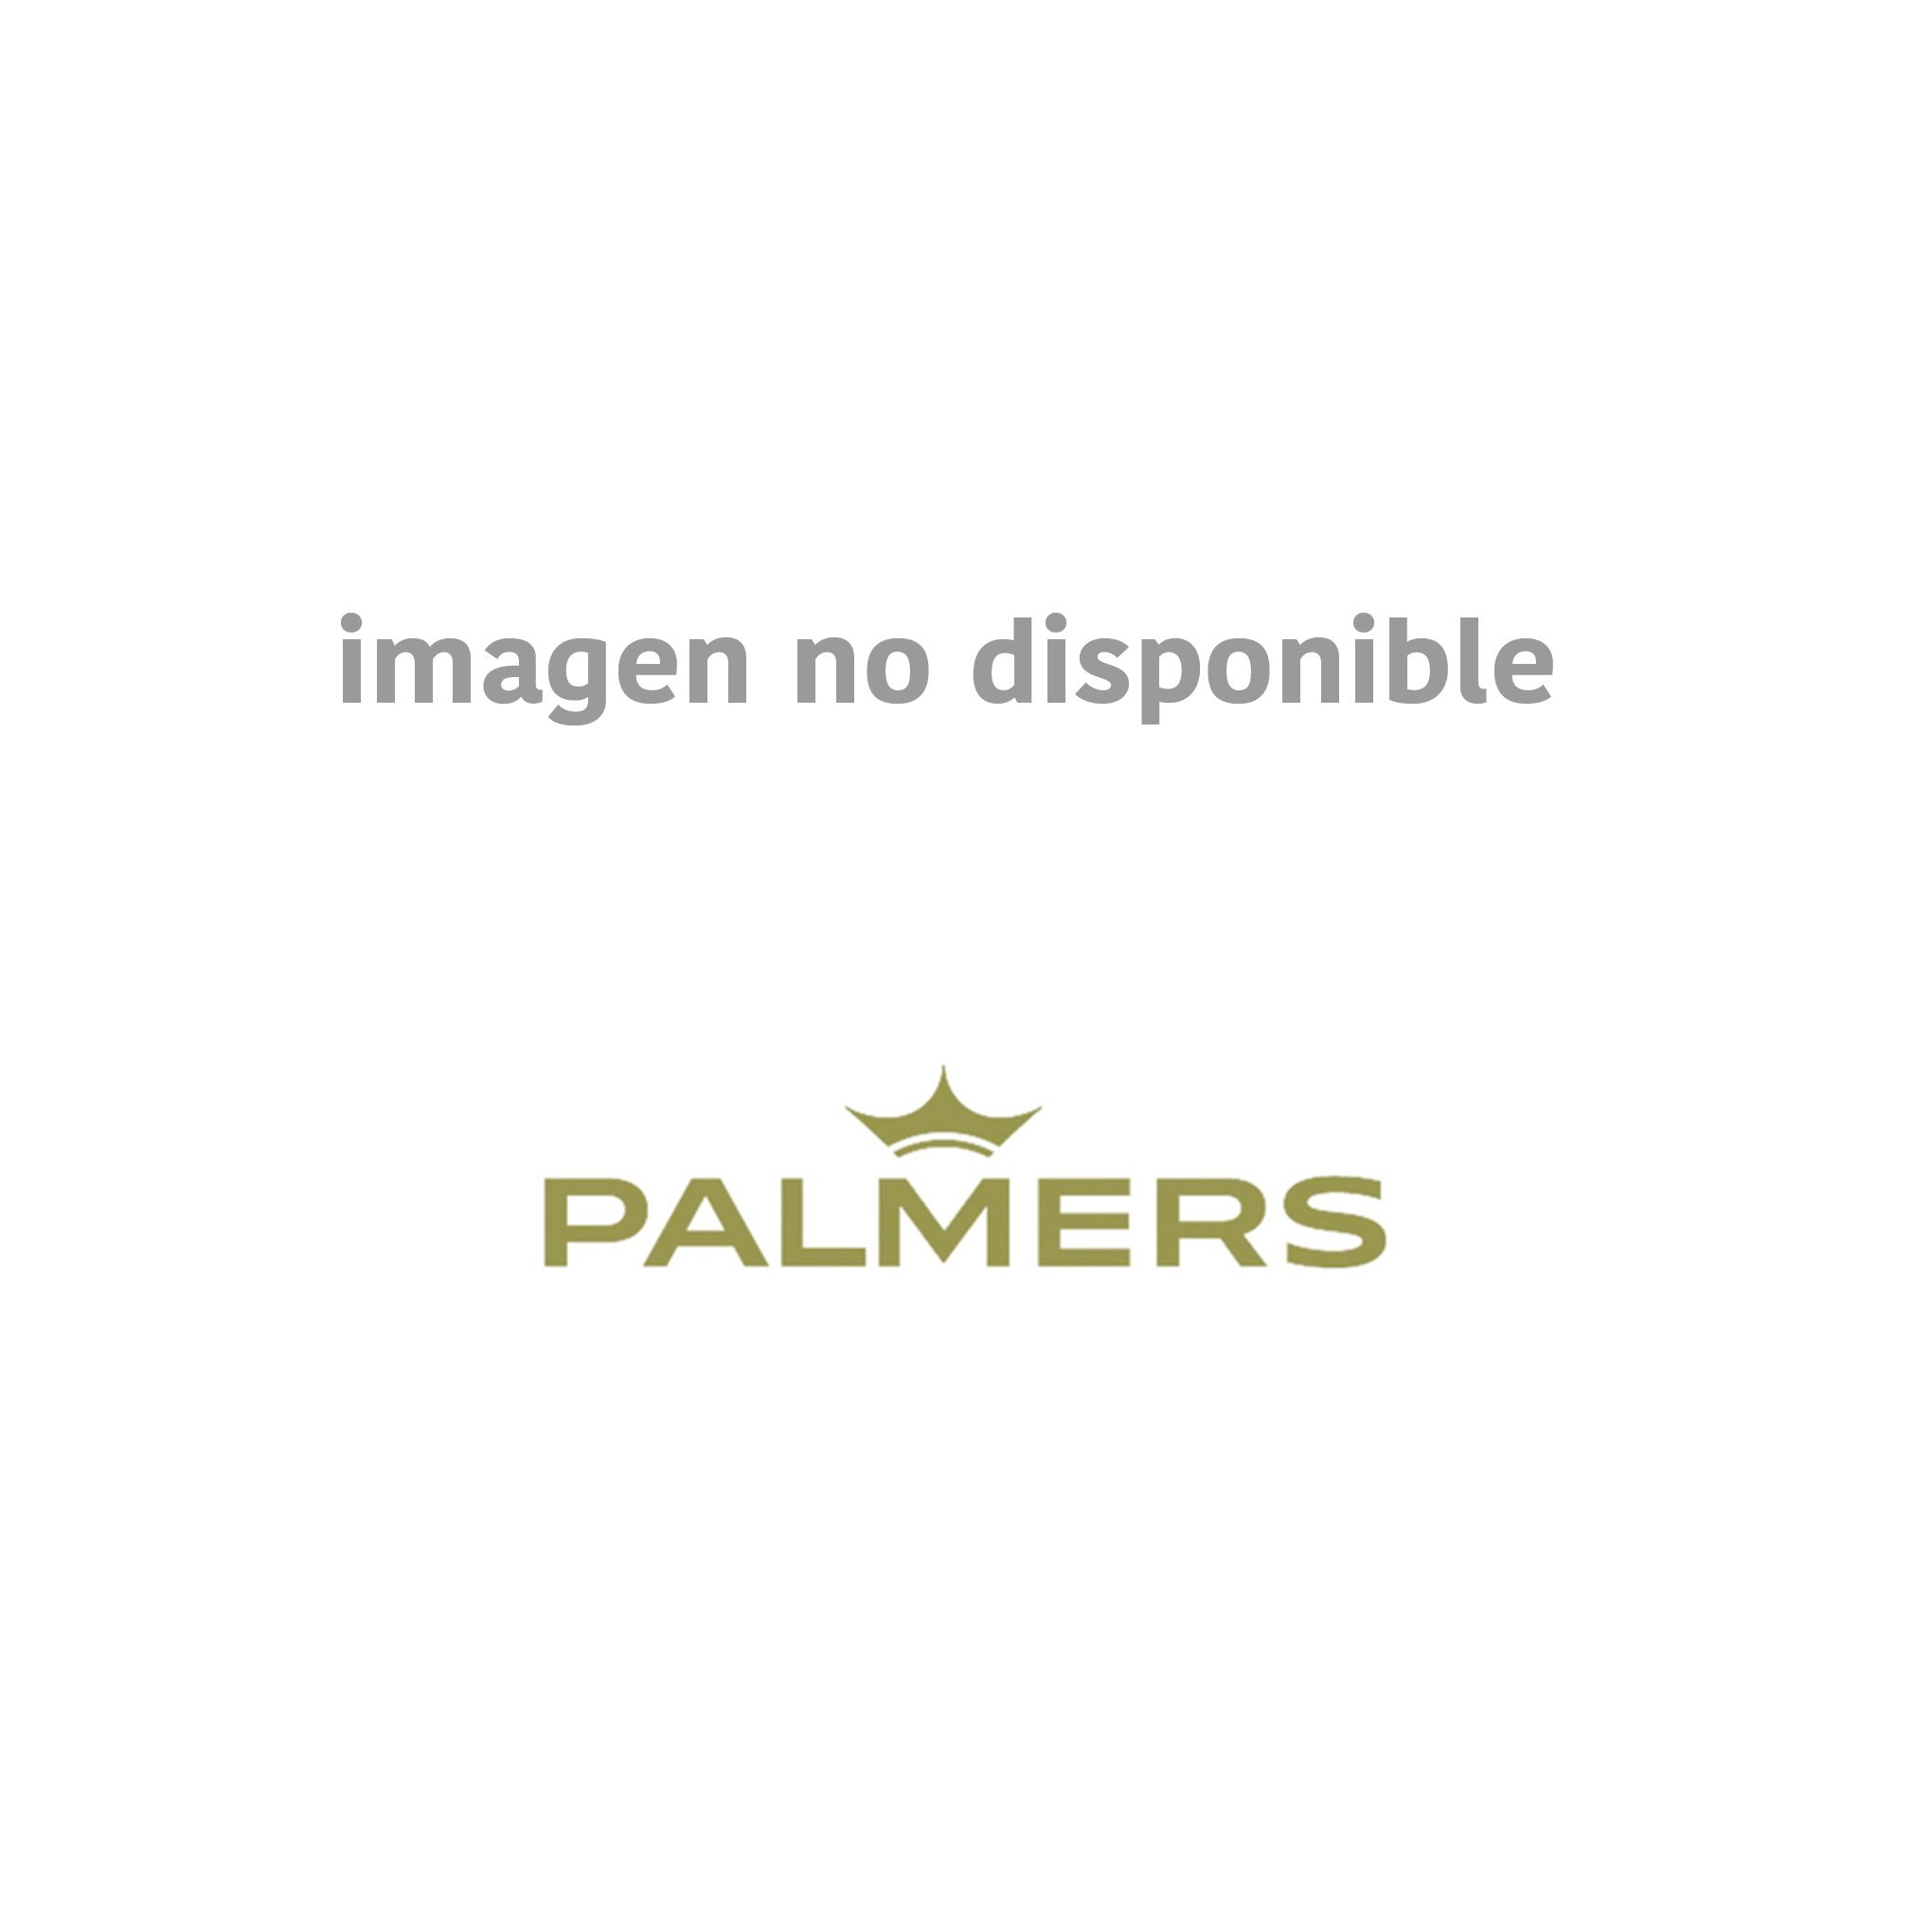 Colaless PALMERS imagen_no_disponible